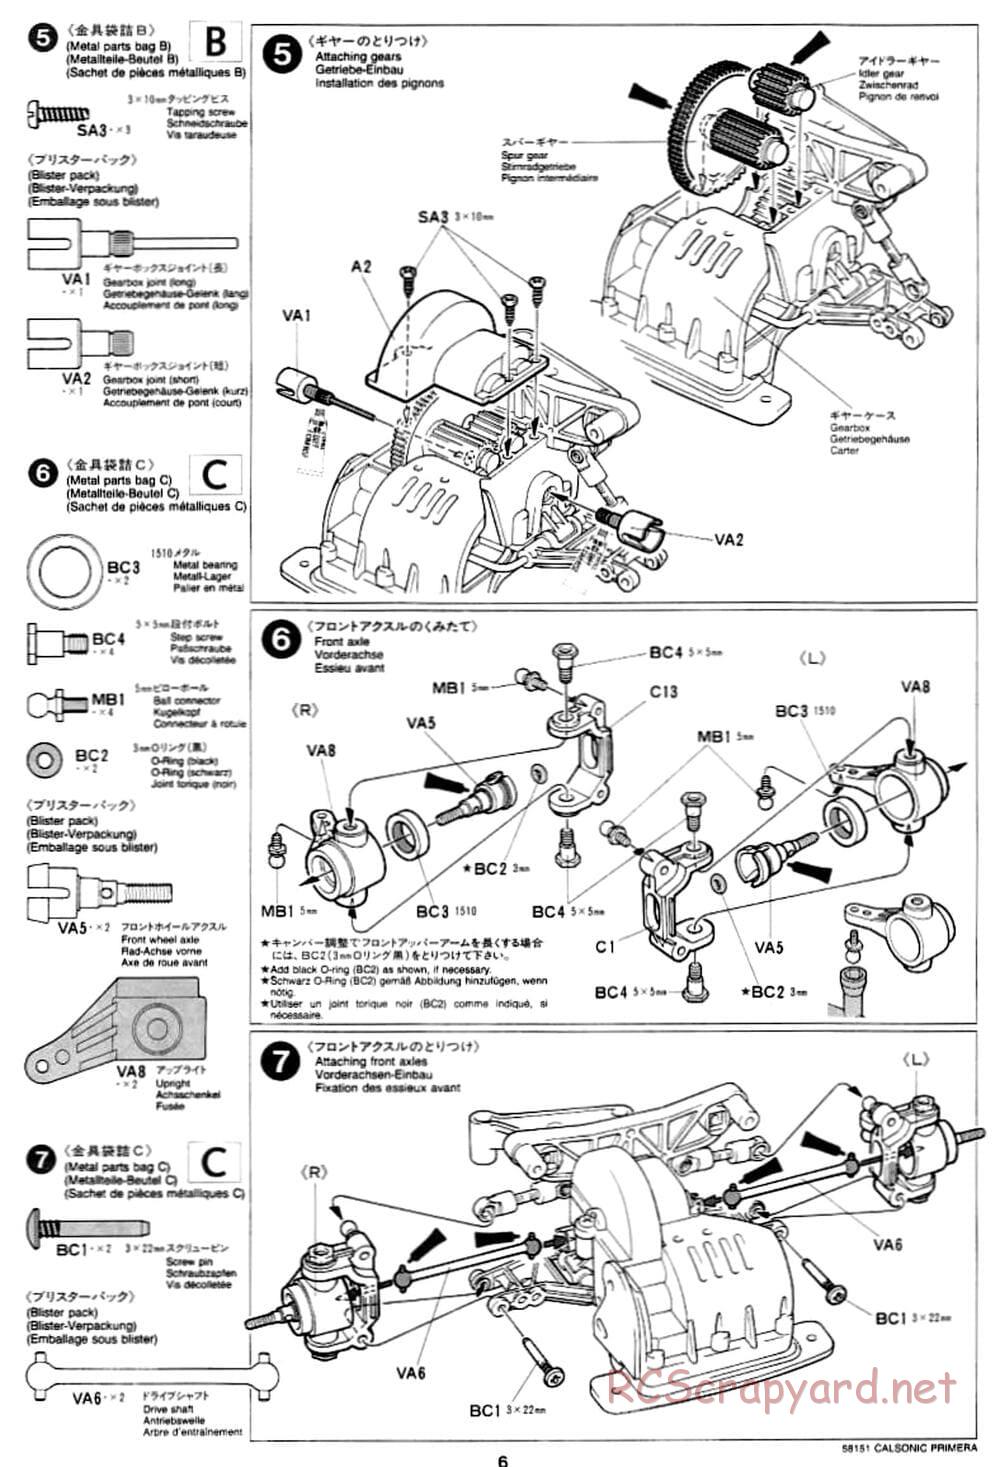 Tamiya - Calsonic Nissan Primera JTCC - FF-01 Chassis - Manual - Page 6